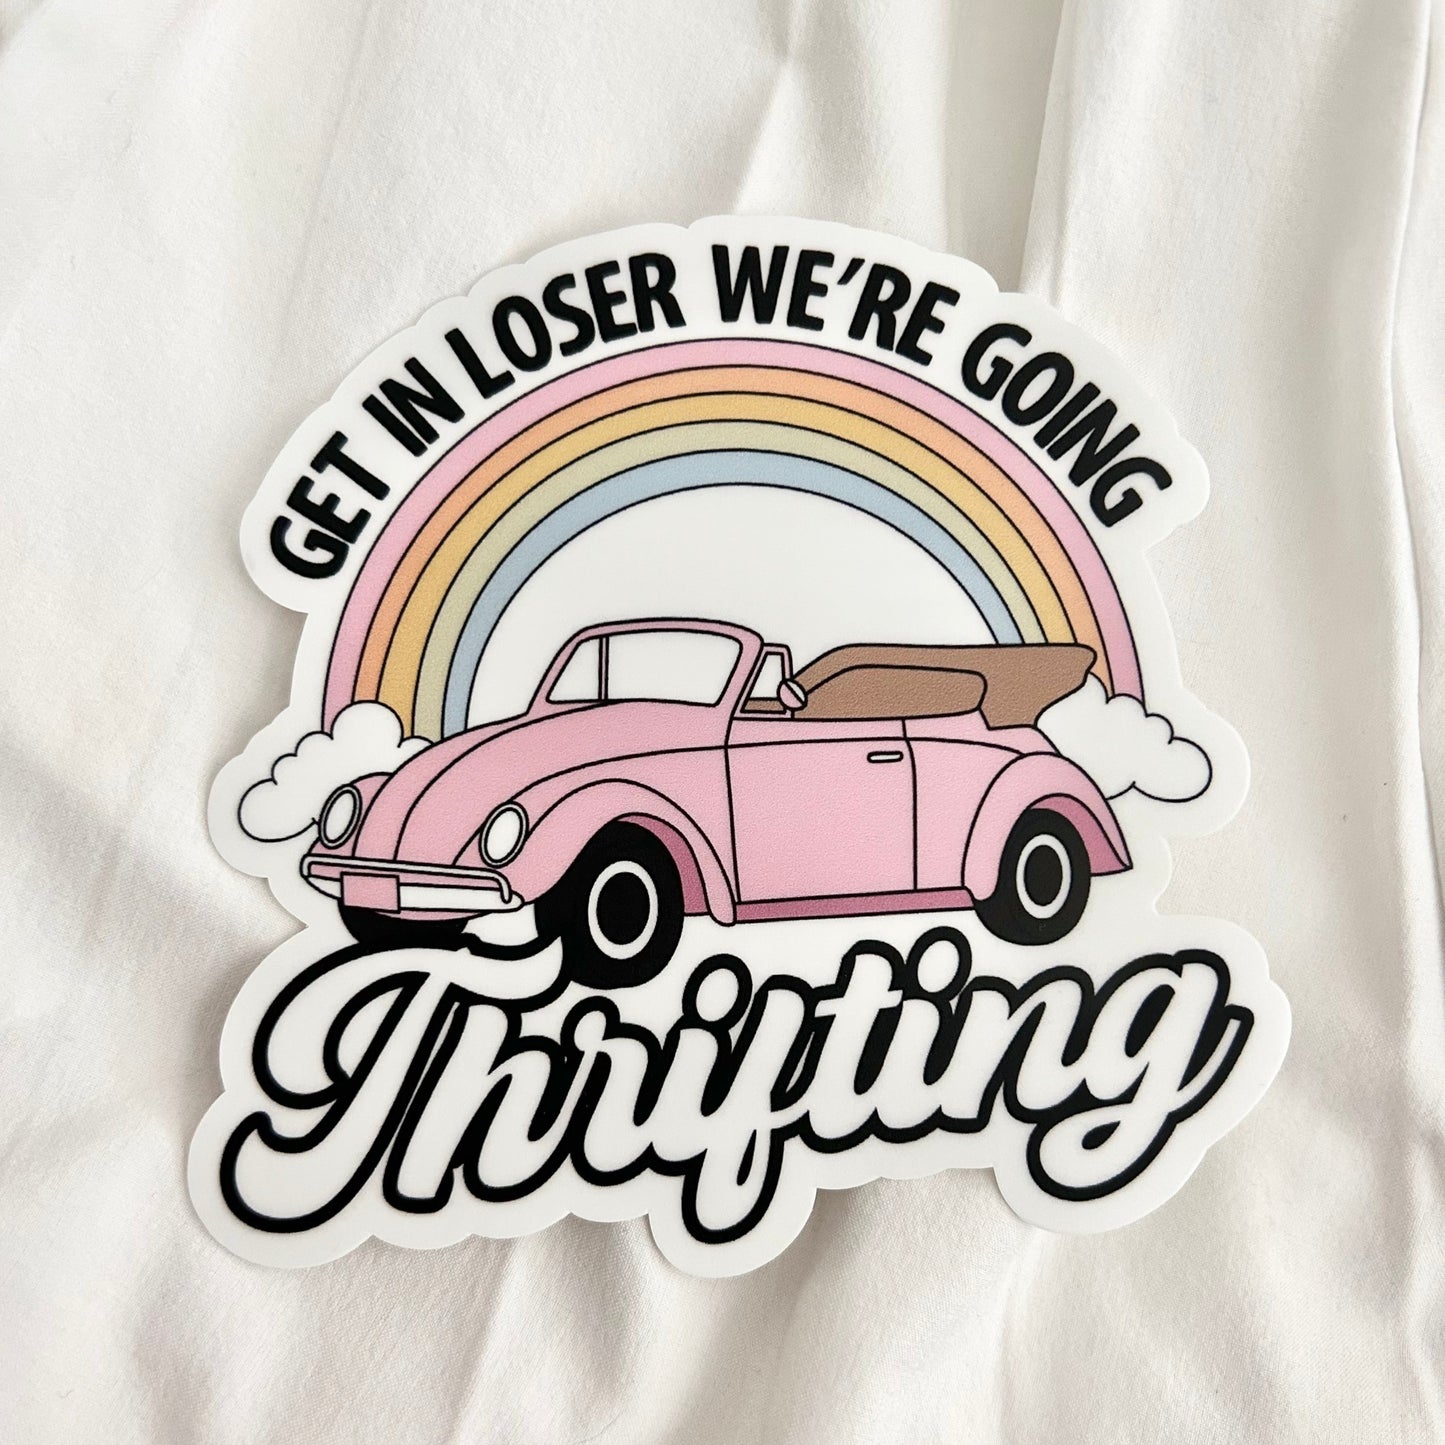 Get In Loser We're Going Thrifting - Bumper Sticker